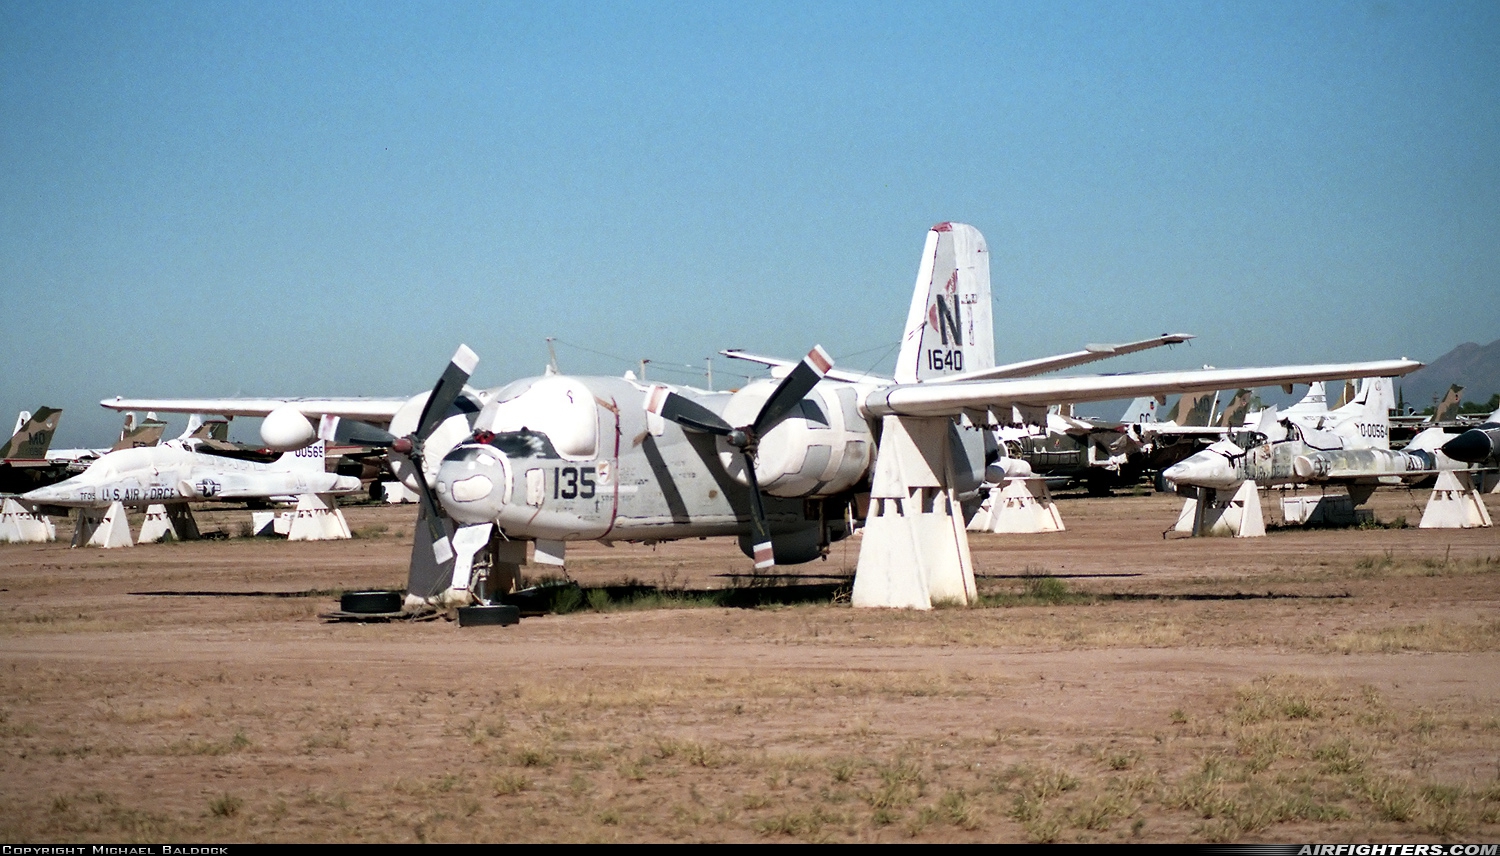 USA - Navy Grumman S-2E Tracker (G-121/S2F-3S) 151640 at Tucson - Davis-Monthan AFB (DMA / KDMA), USA